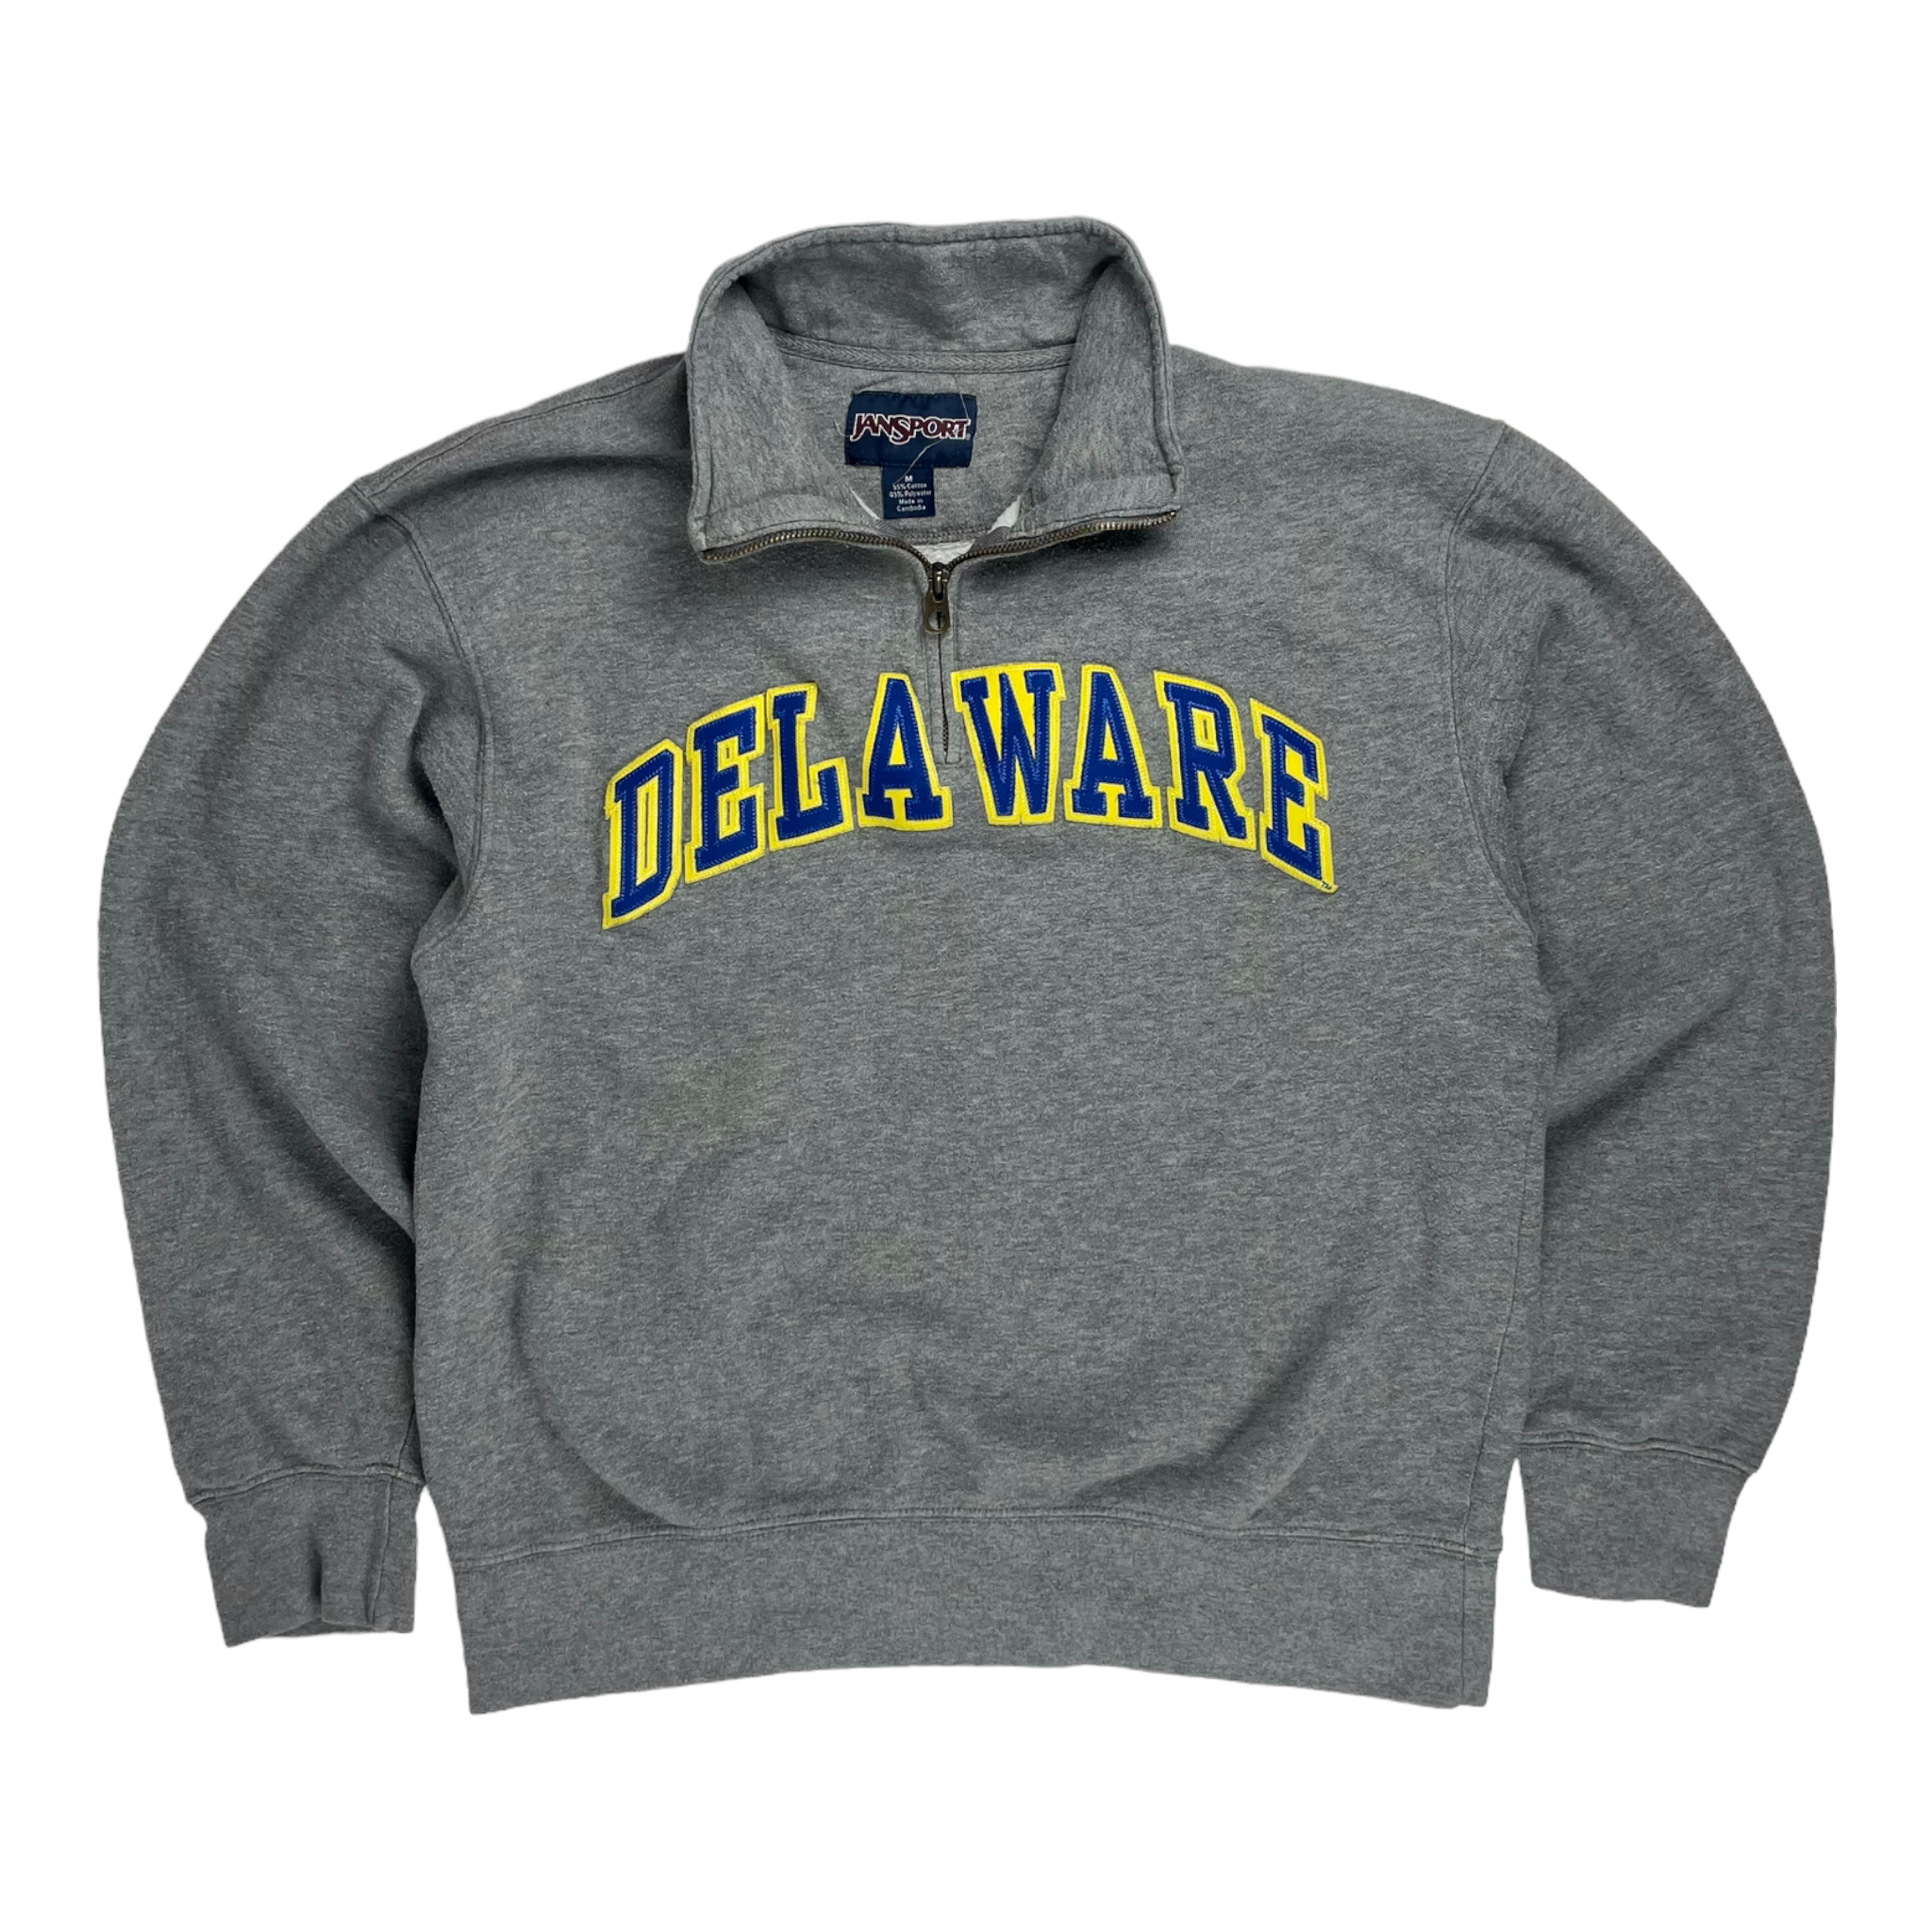 Vintage The Delaware Fightin' Blue Sweatshirt - Restorecph